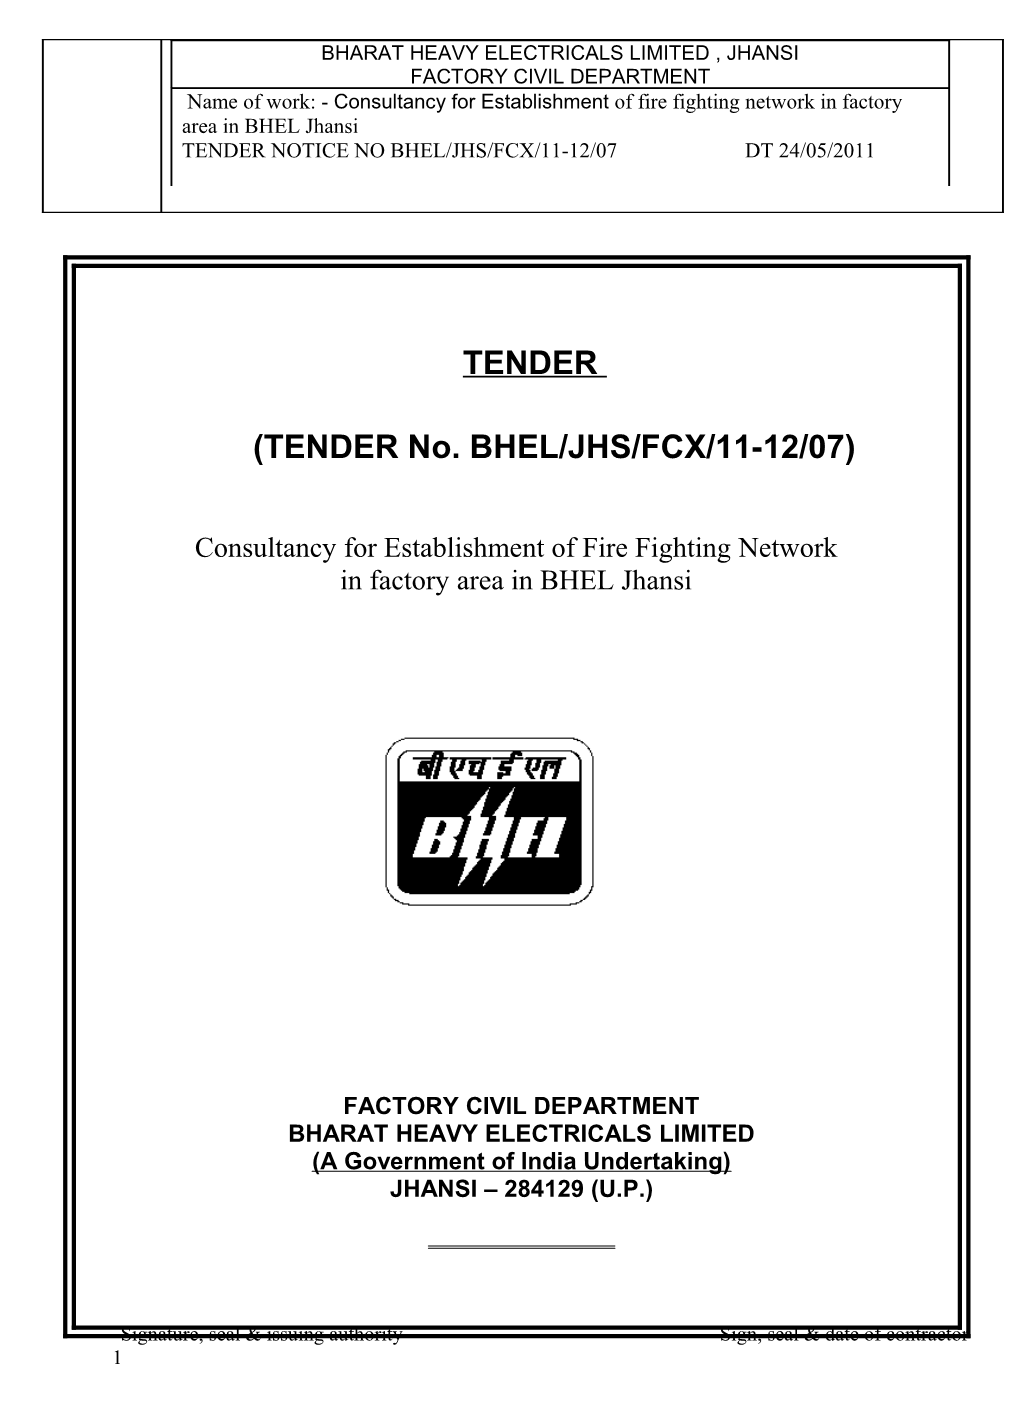 TENDER No. BHEL/JHS/FCX/11-12/07